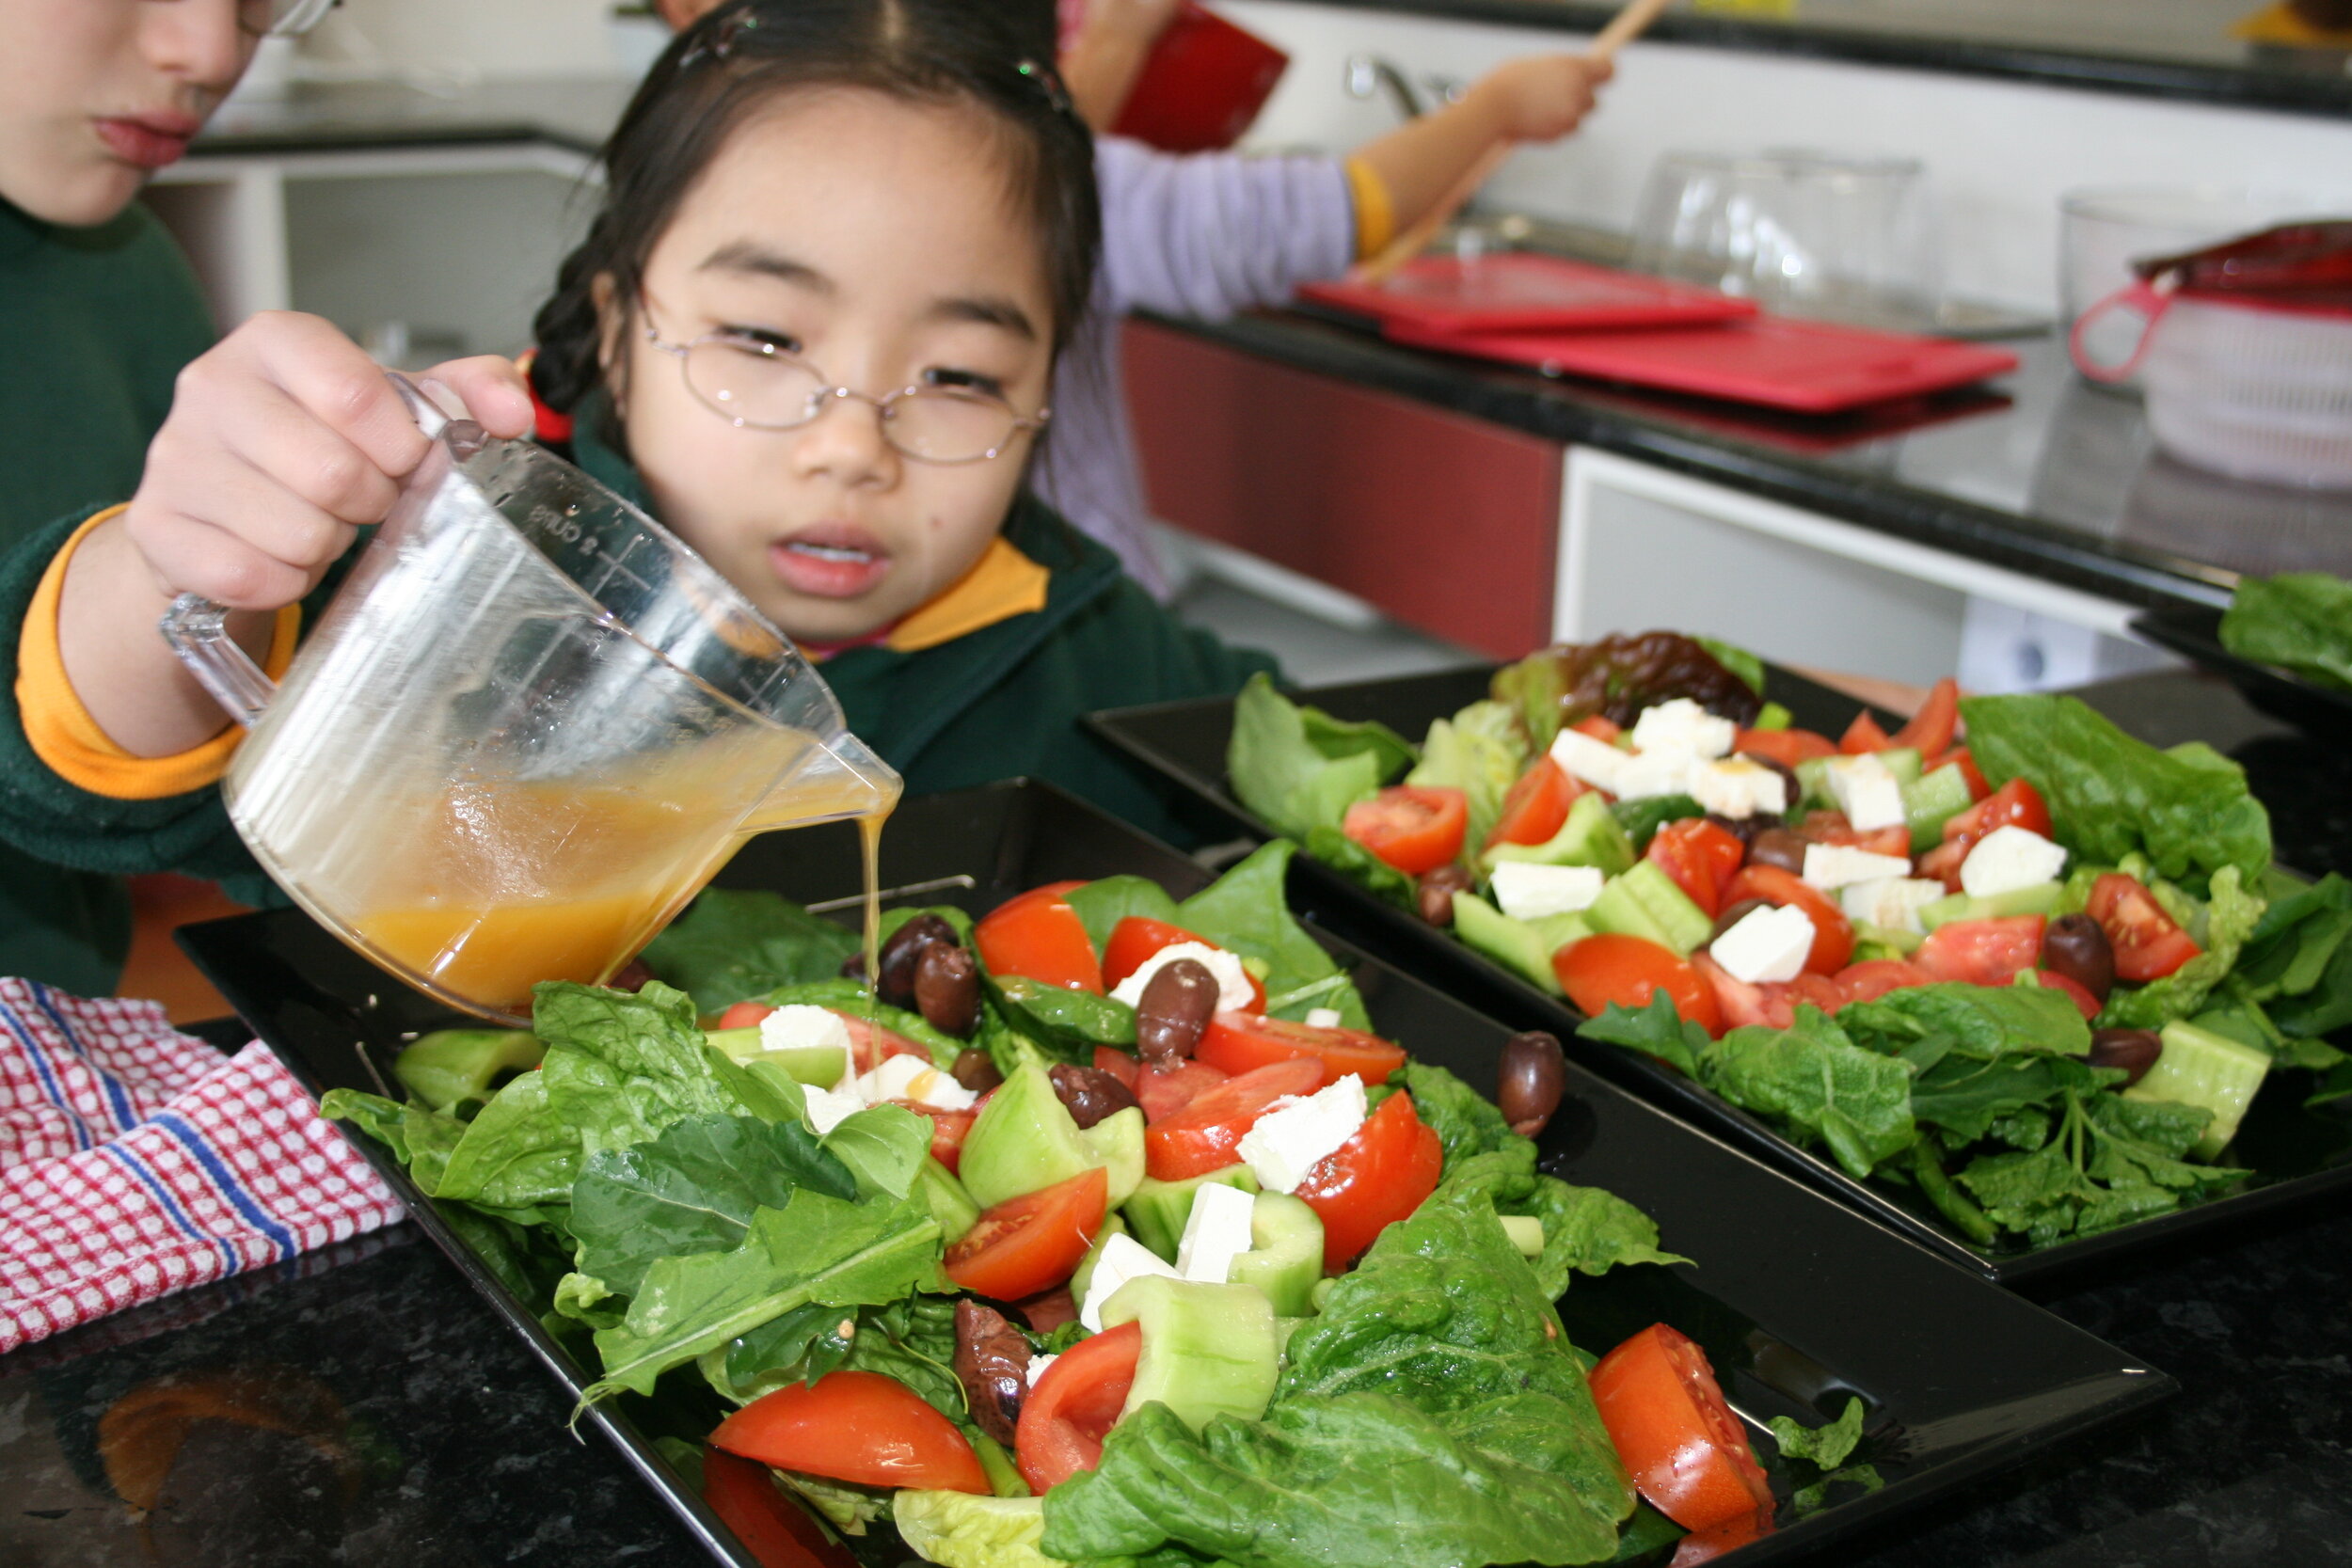 Sunshine North Primary_kitchen_children_cooking_salads_lettuces_olives_tomatoes_dressing_October 2007_GFYL1_HR_1.JPG